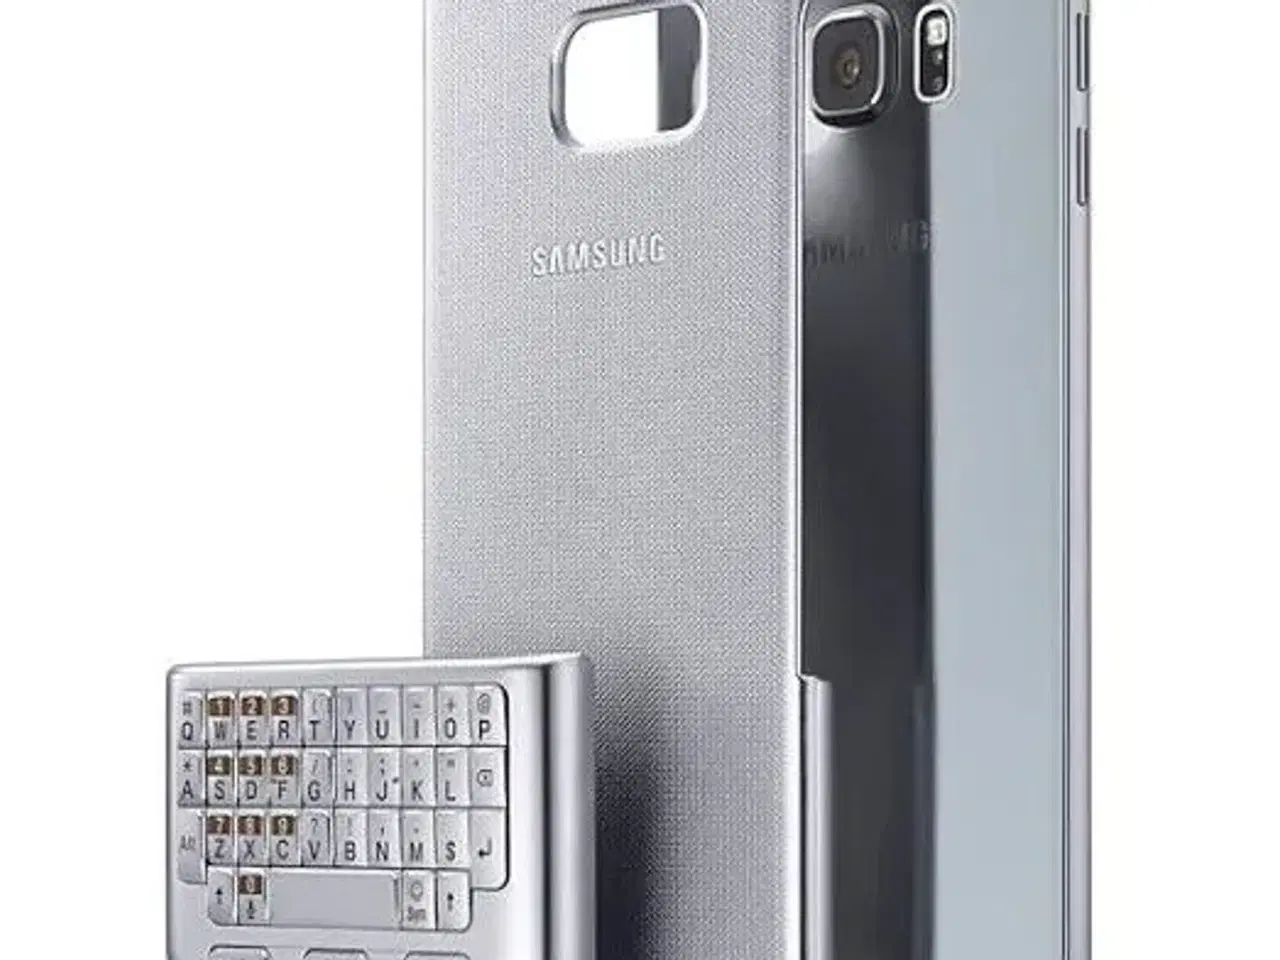 Billede 1 - Chatboard til Samsung Galaxy S6 edge+